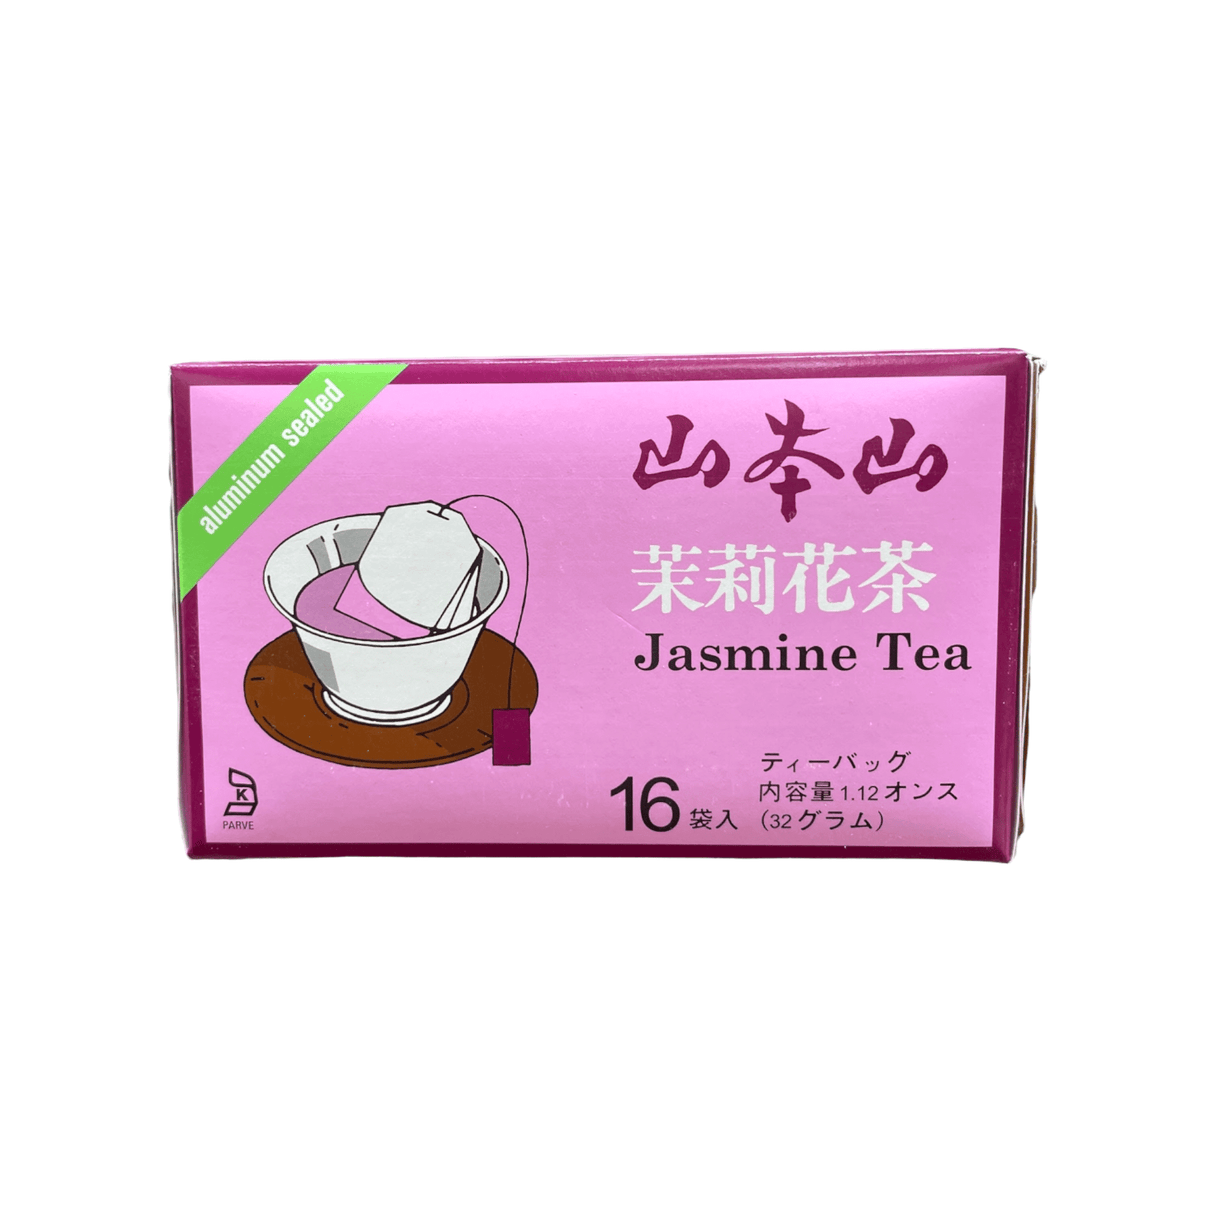 Yamamotoyama Jasmine Tea